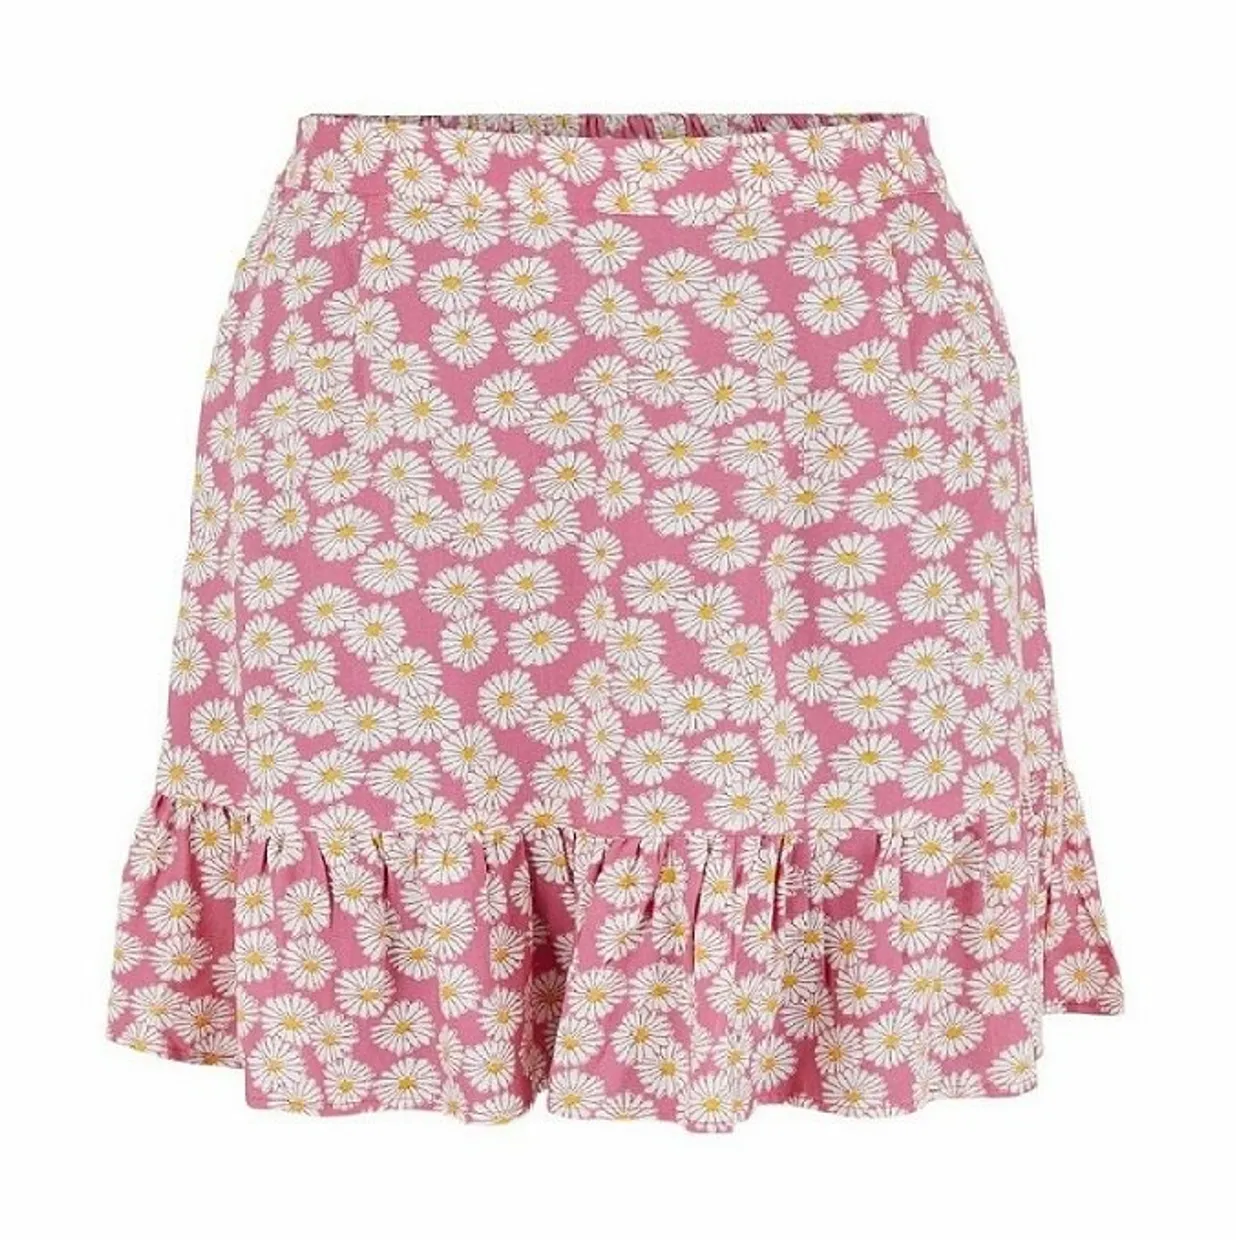 Nya HW skirt daisy pink